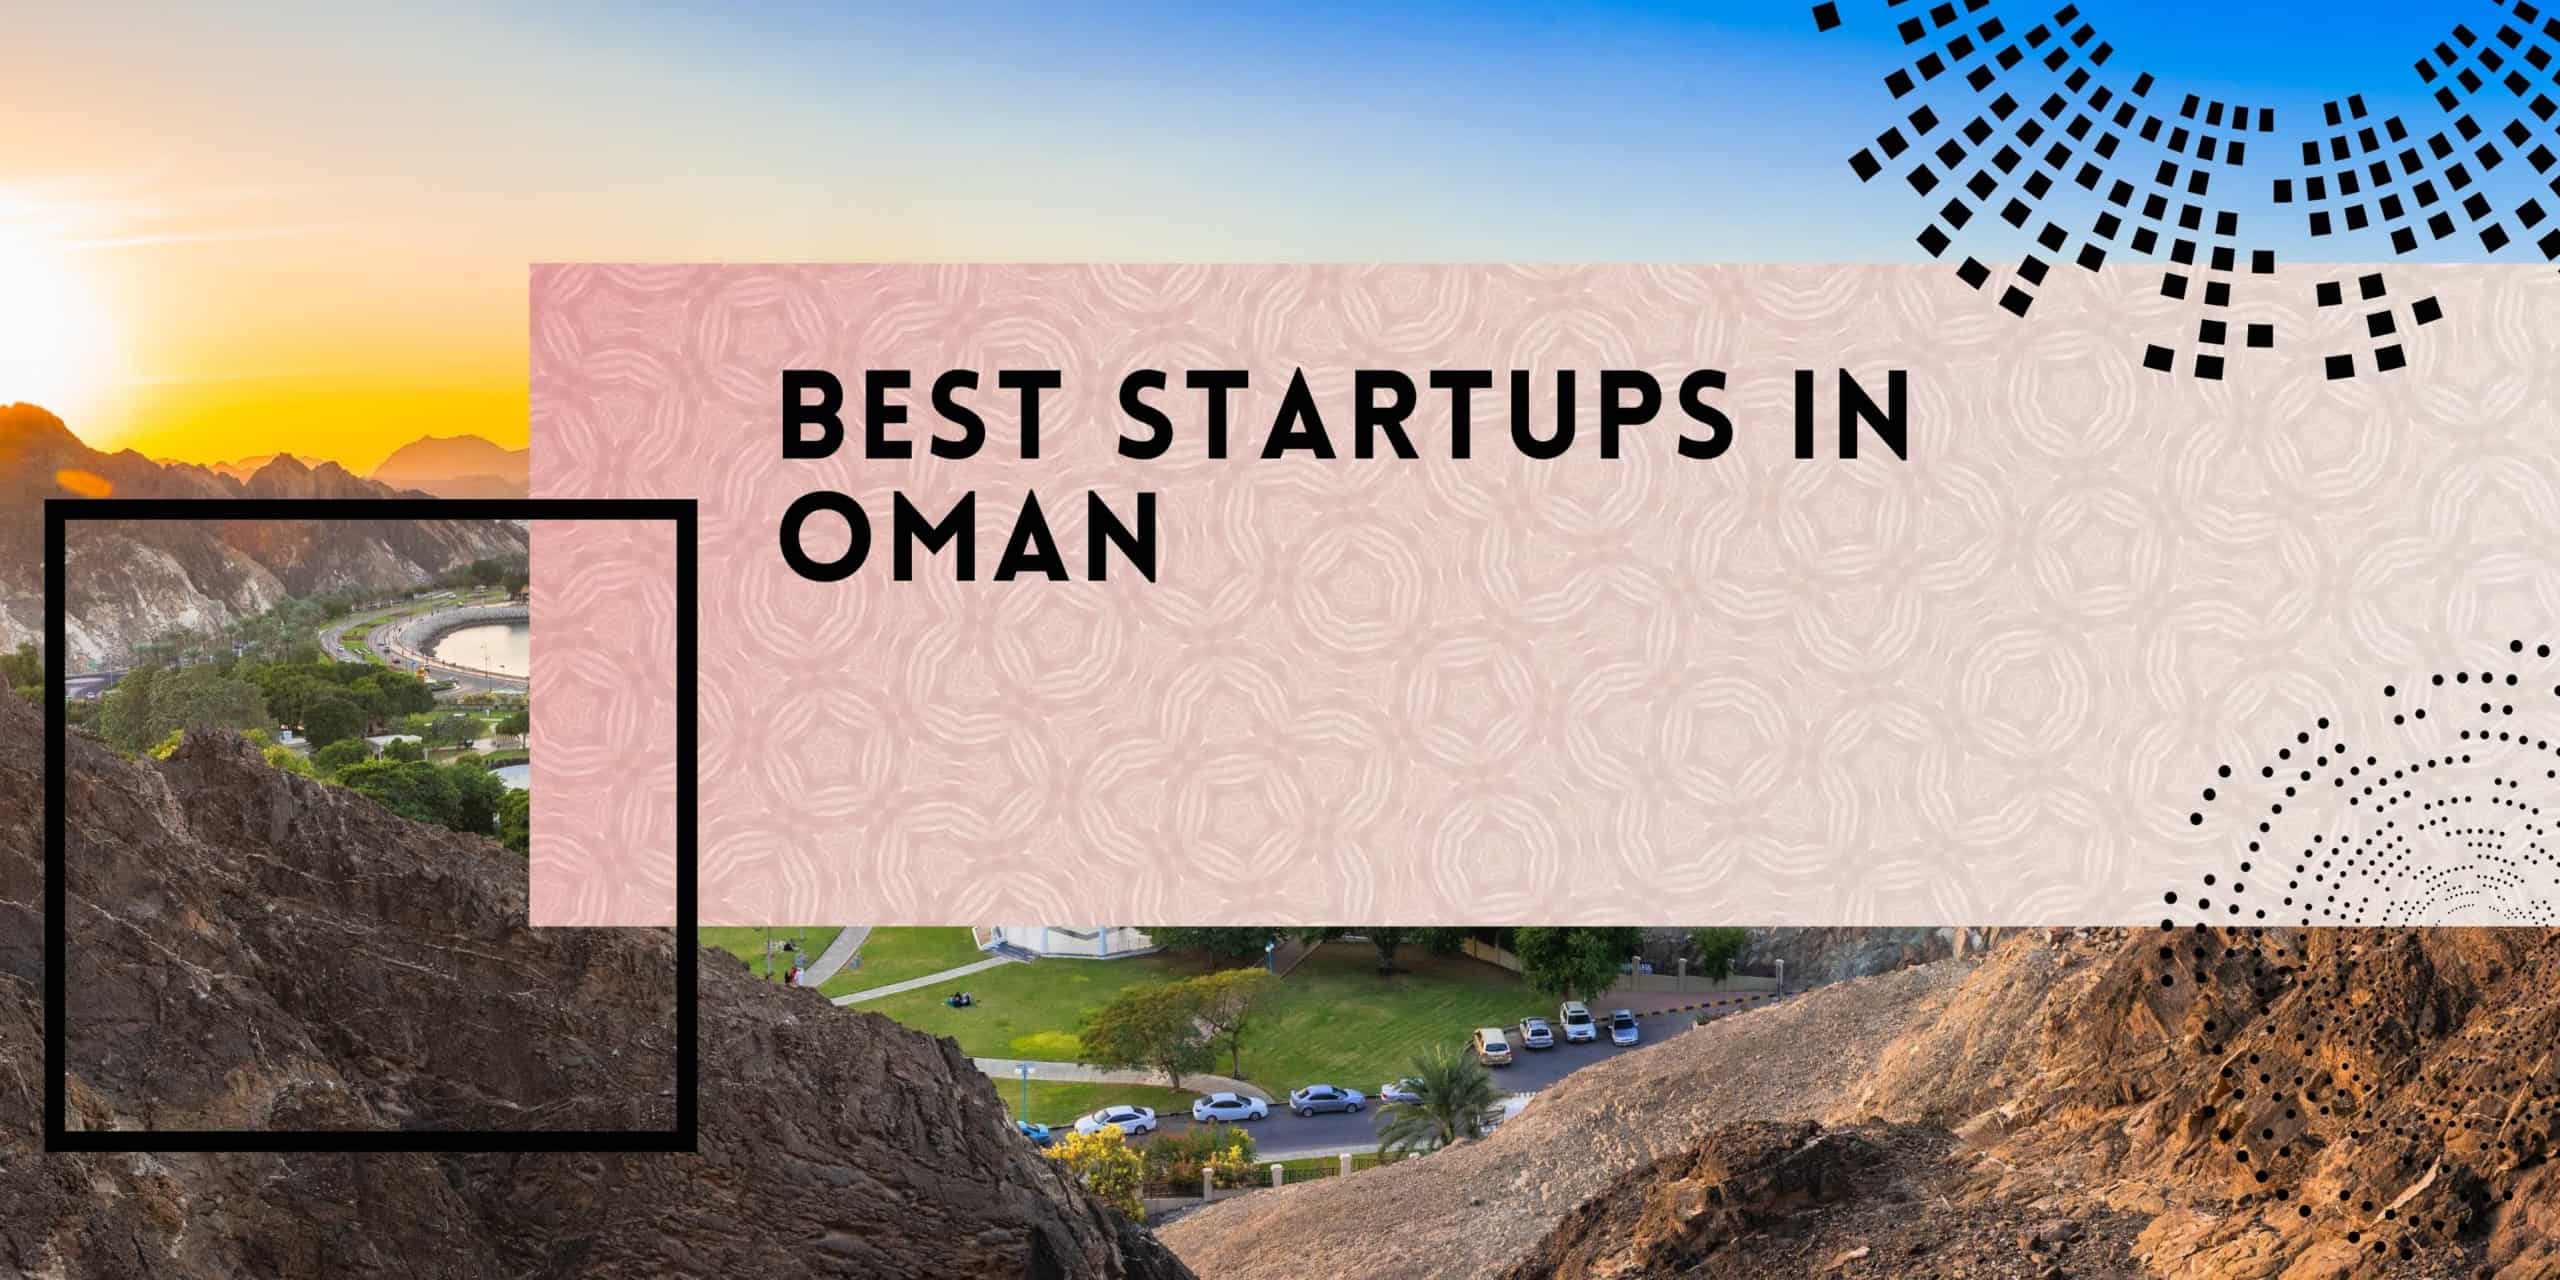 Best Startups in Oman